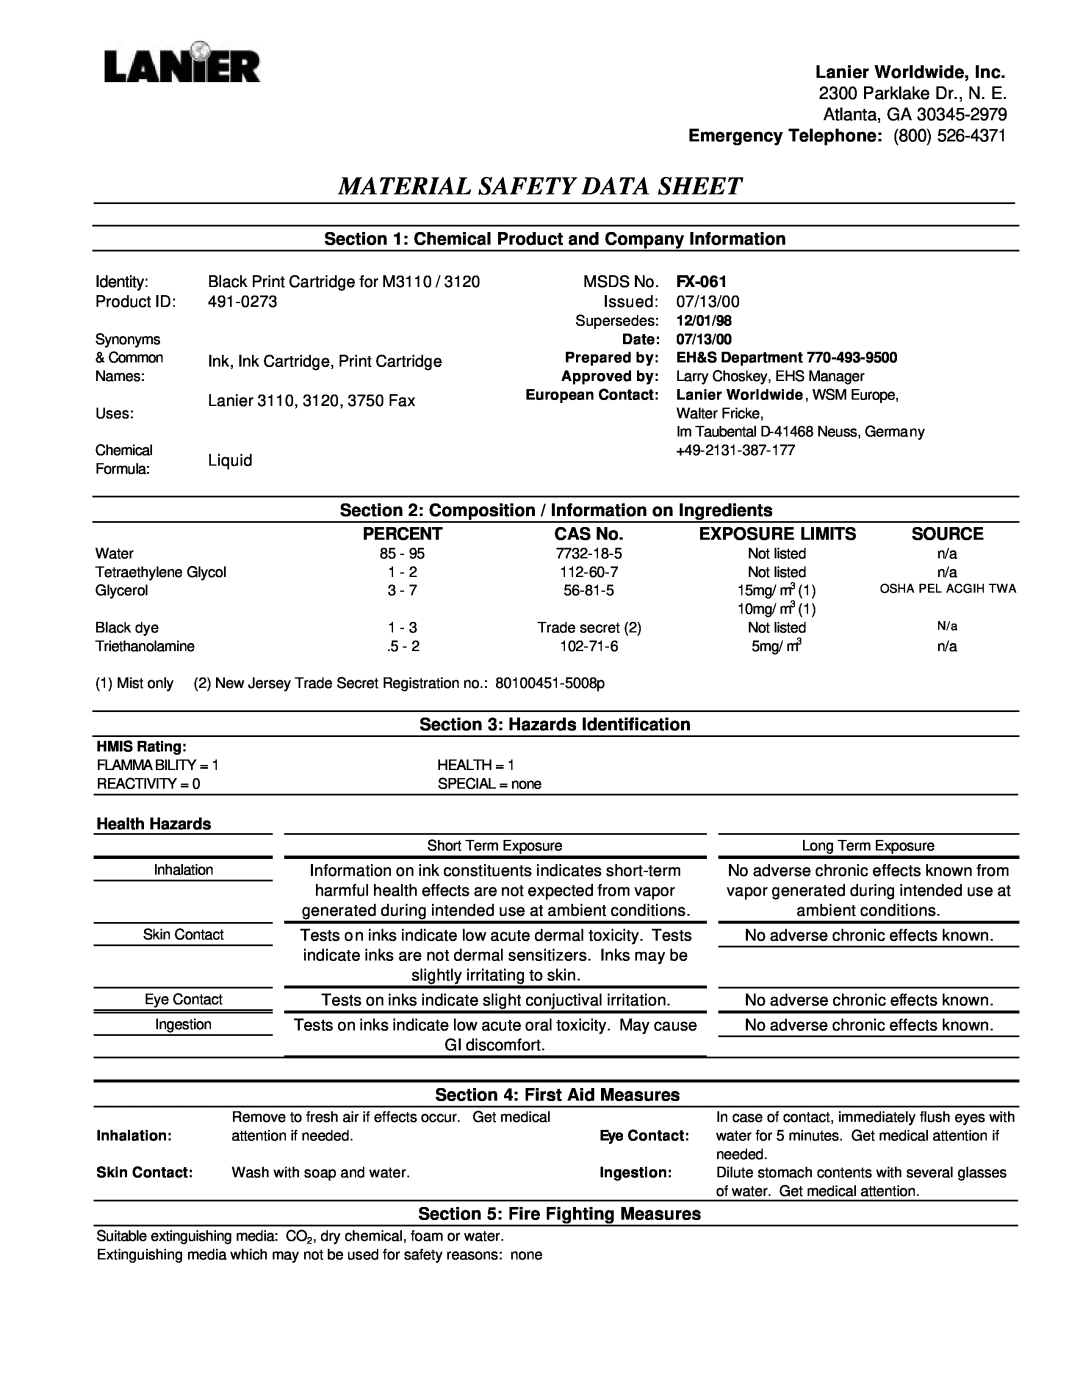 Lanier FX-061 manual Material Safety Data Sheet 